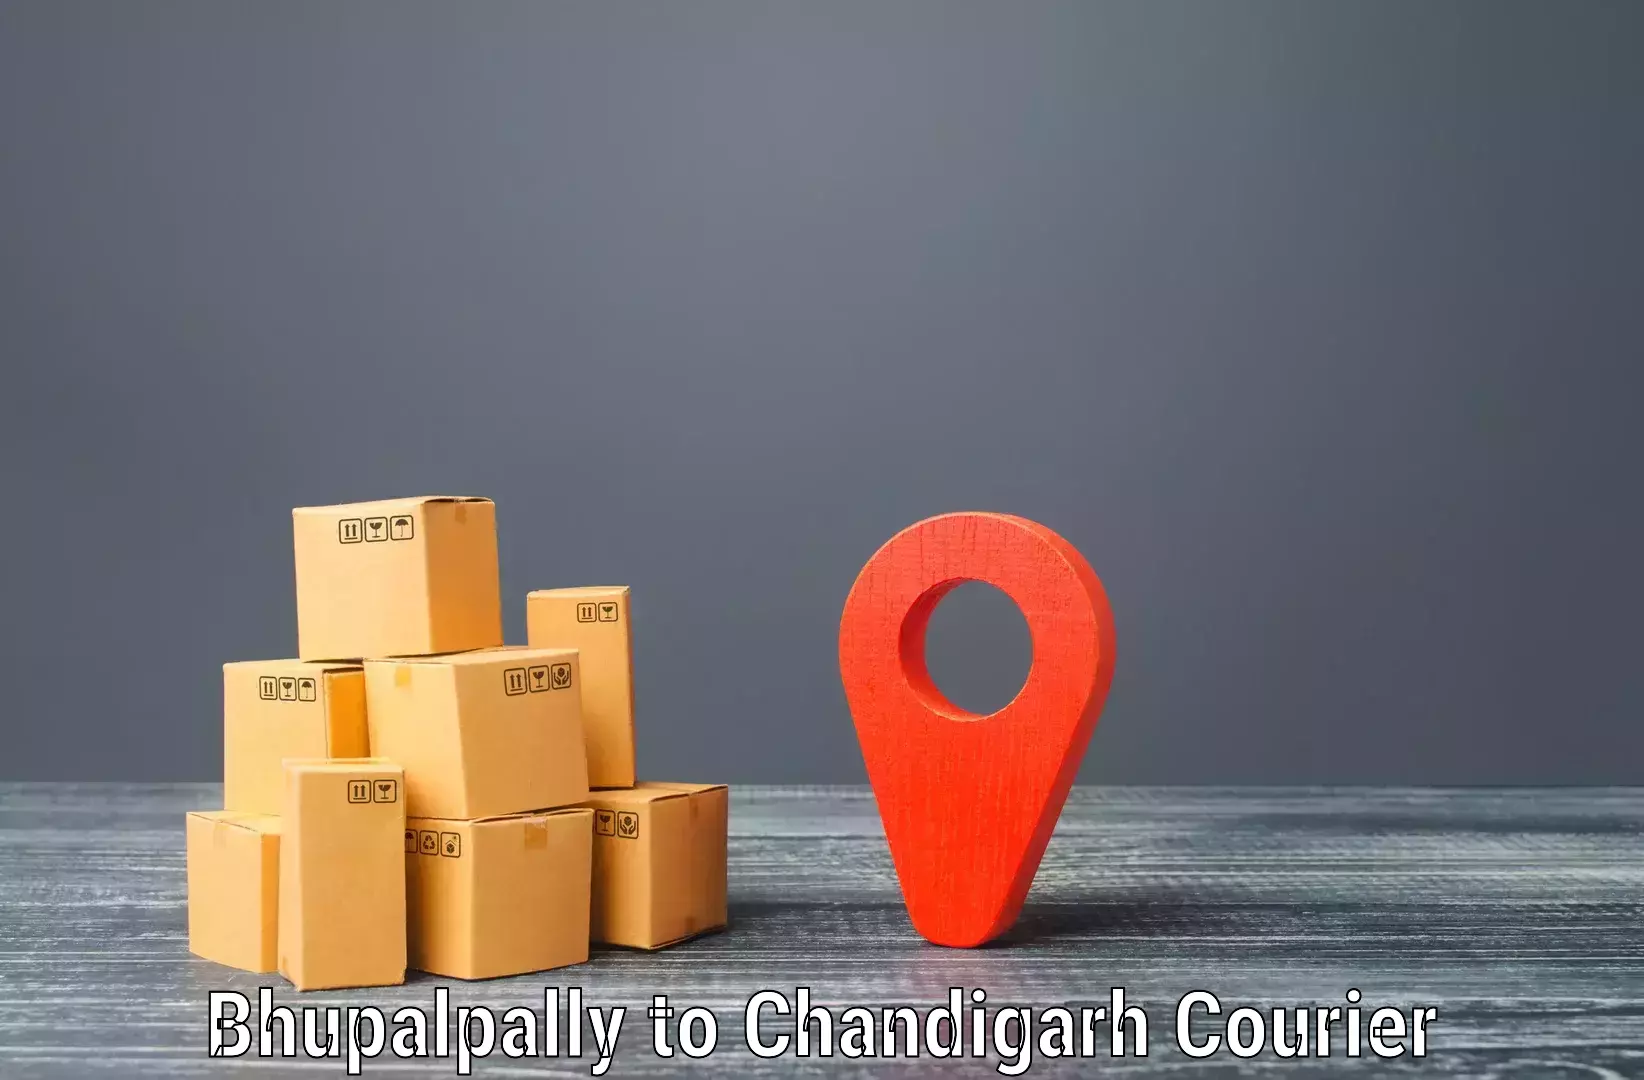 Global shipping networks Bhupalpally to Chandigarh